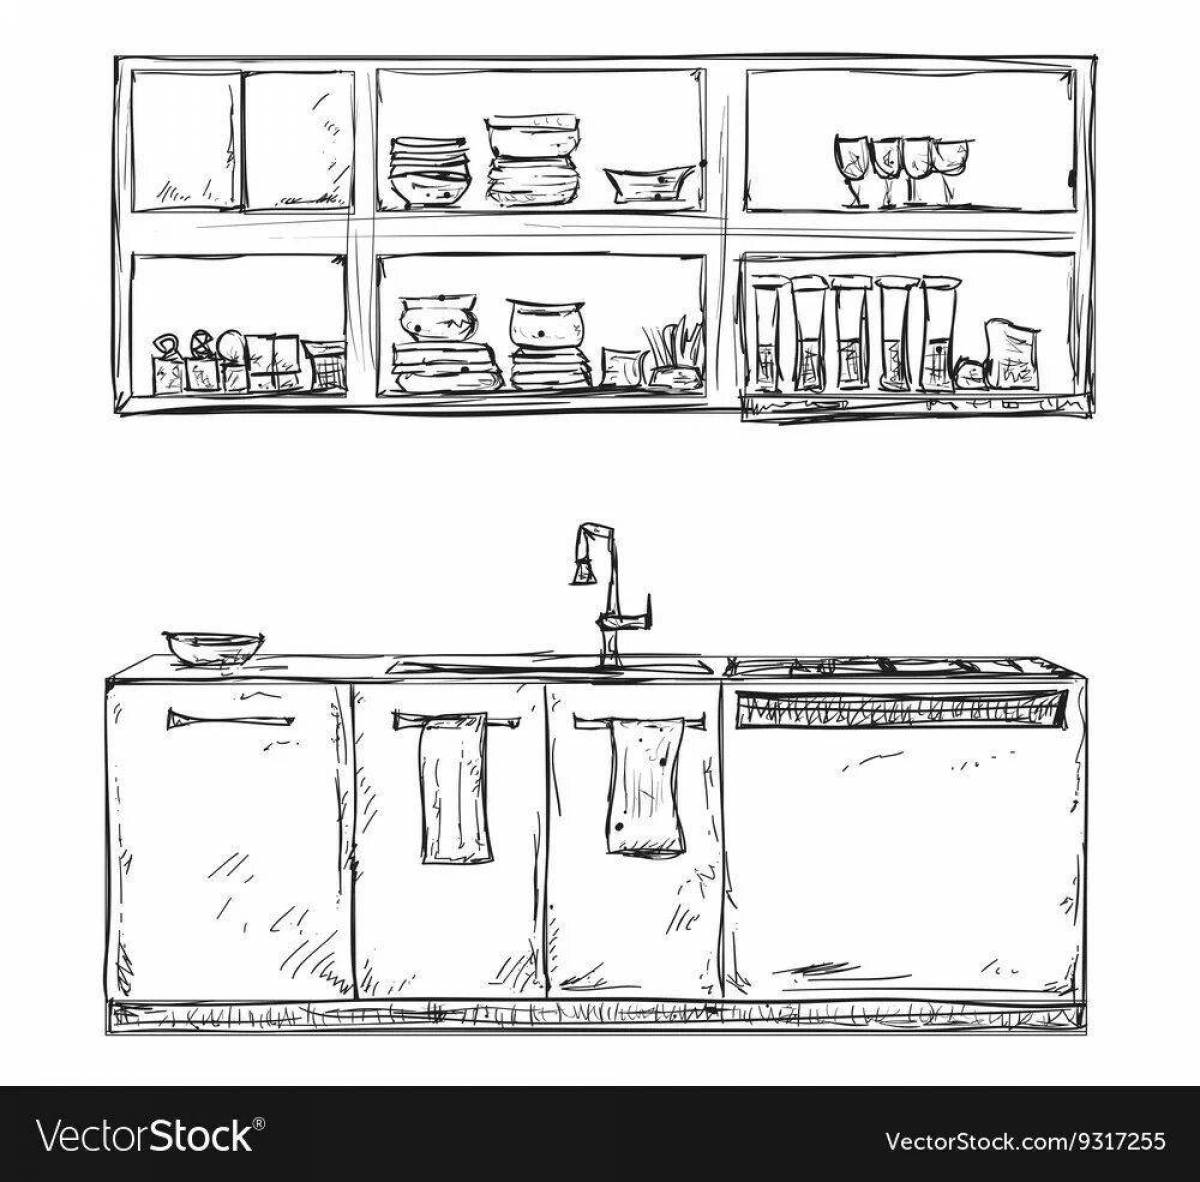 Joyful kitchen cabinet coloring page